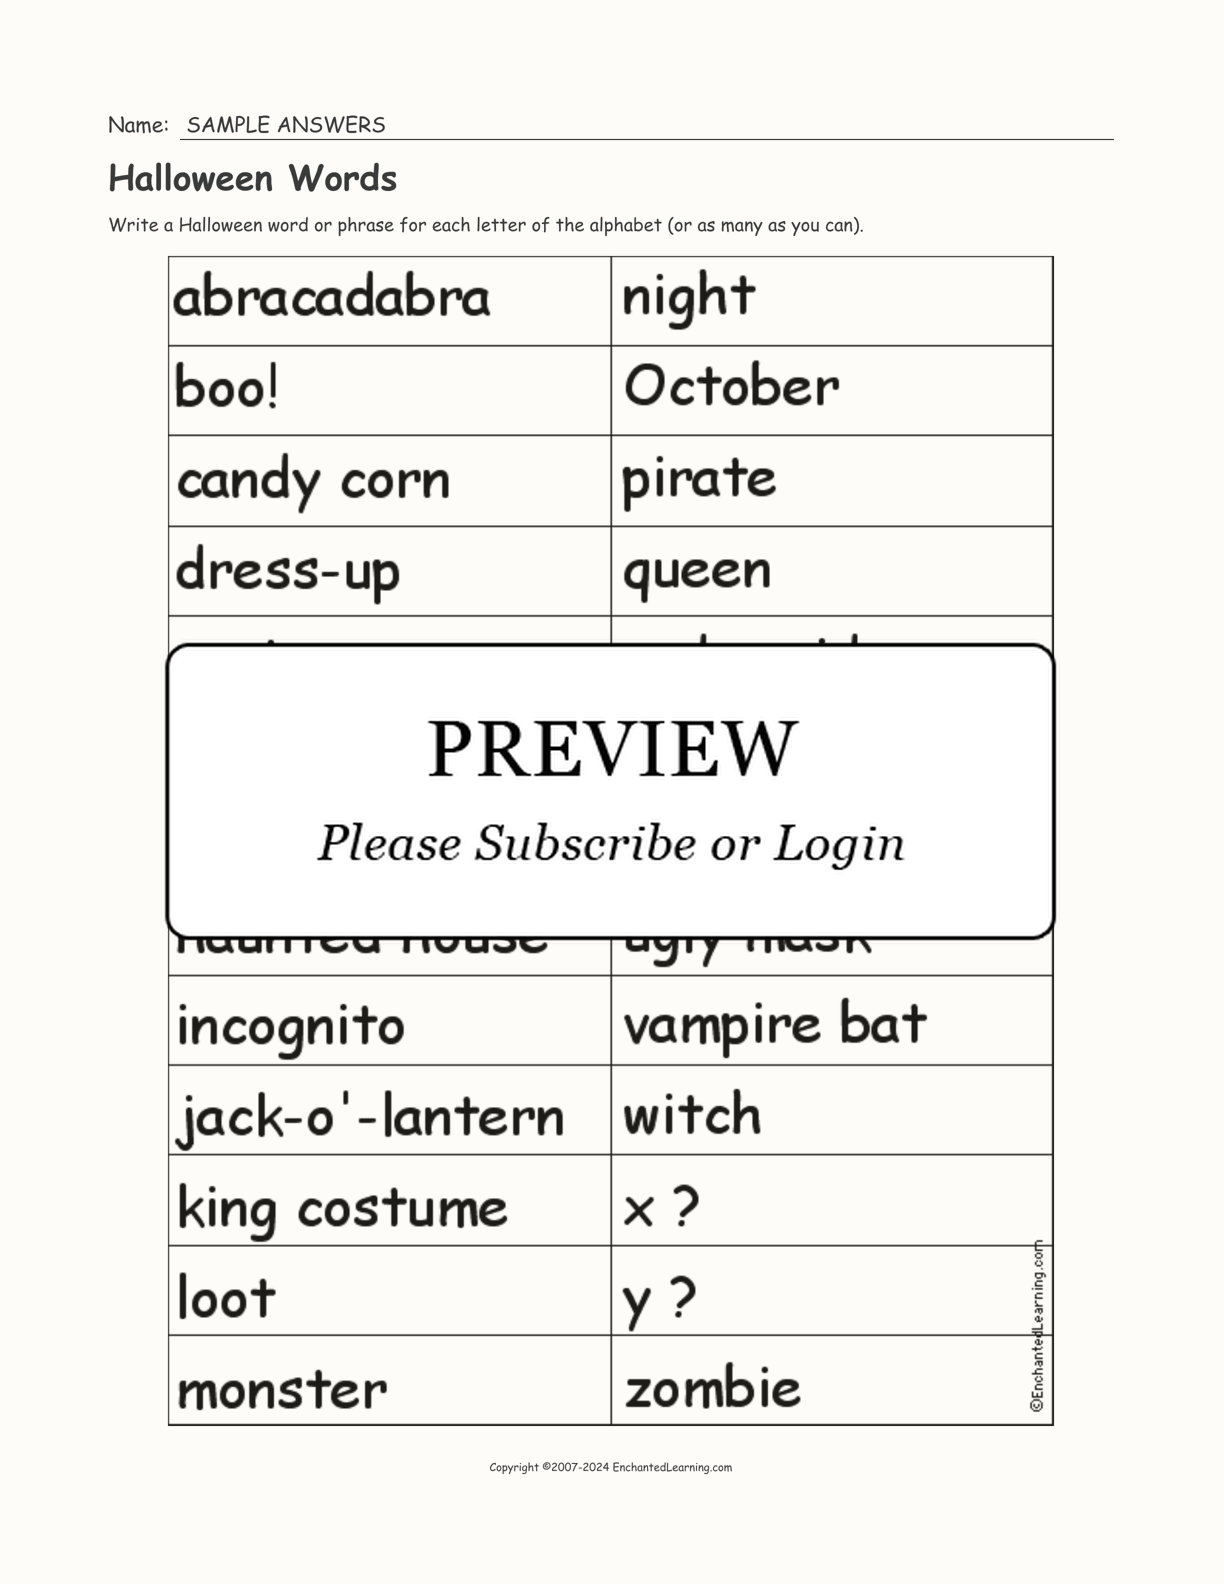 Halloween Words interactive worksheet page 2